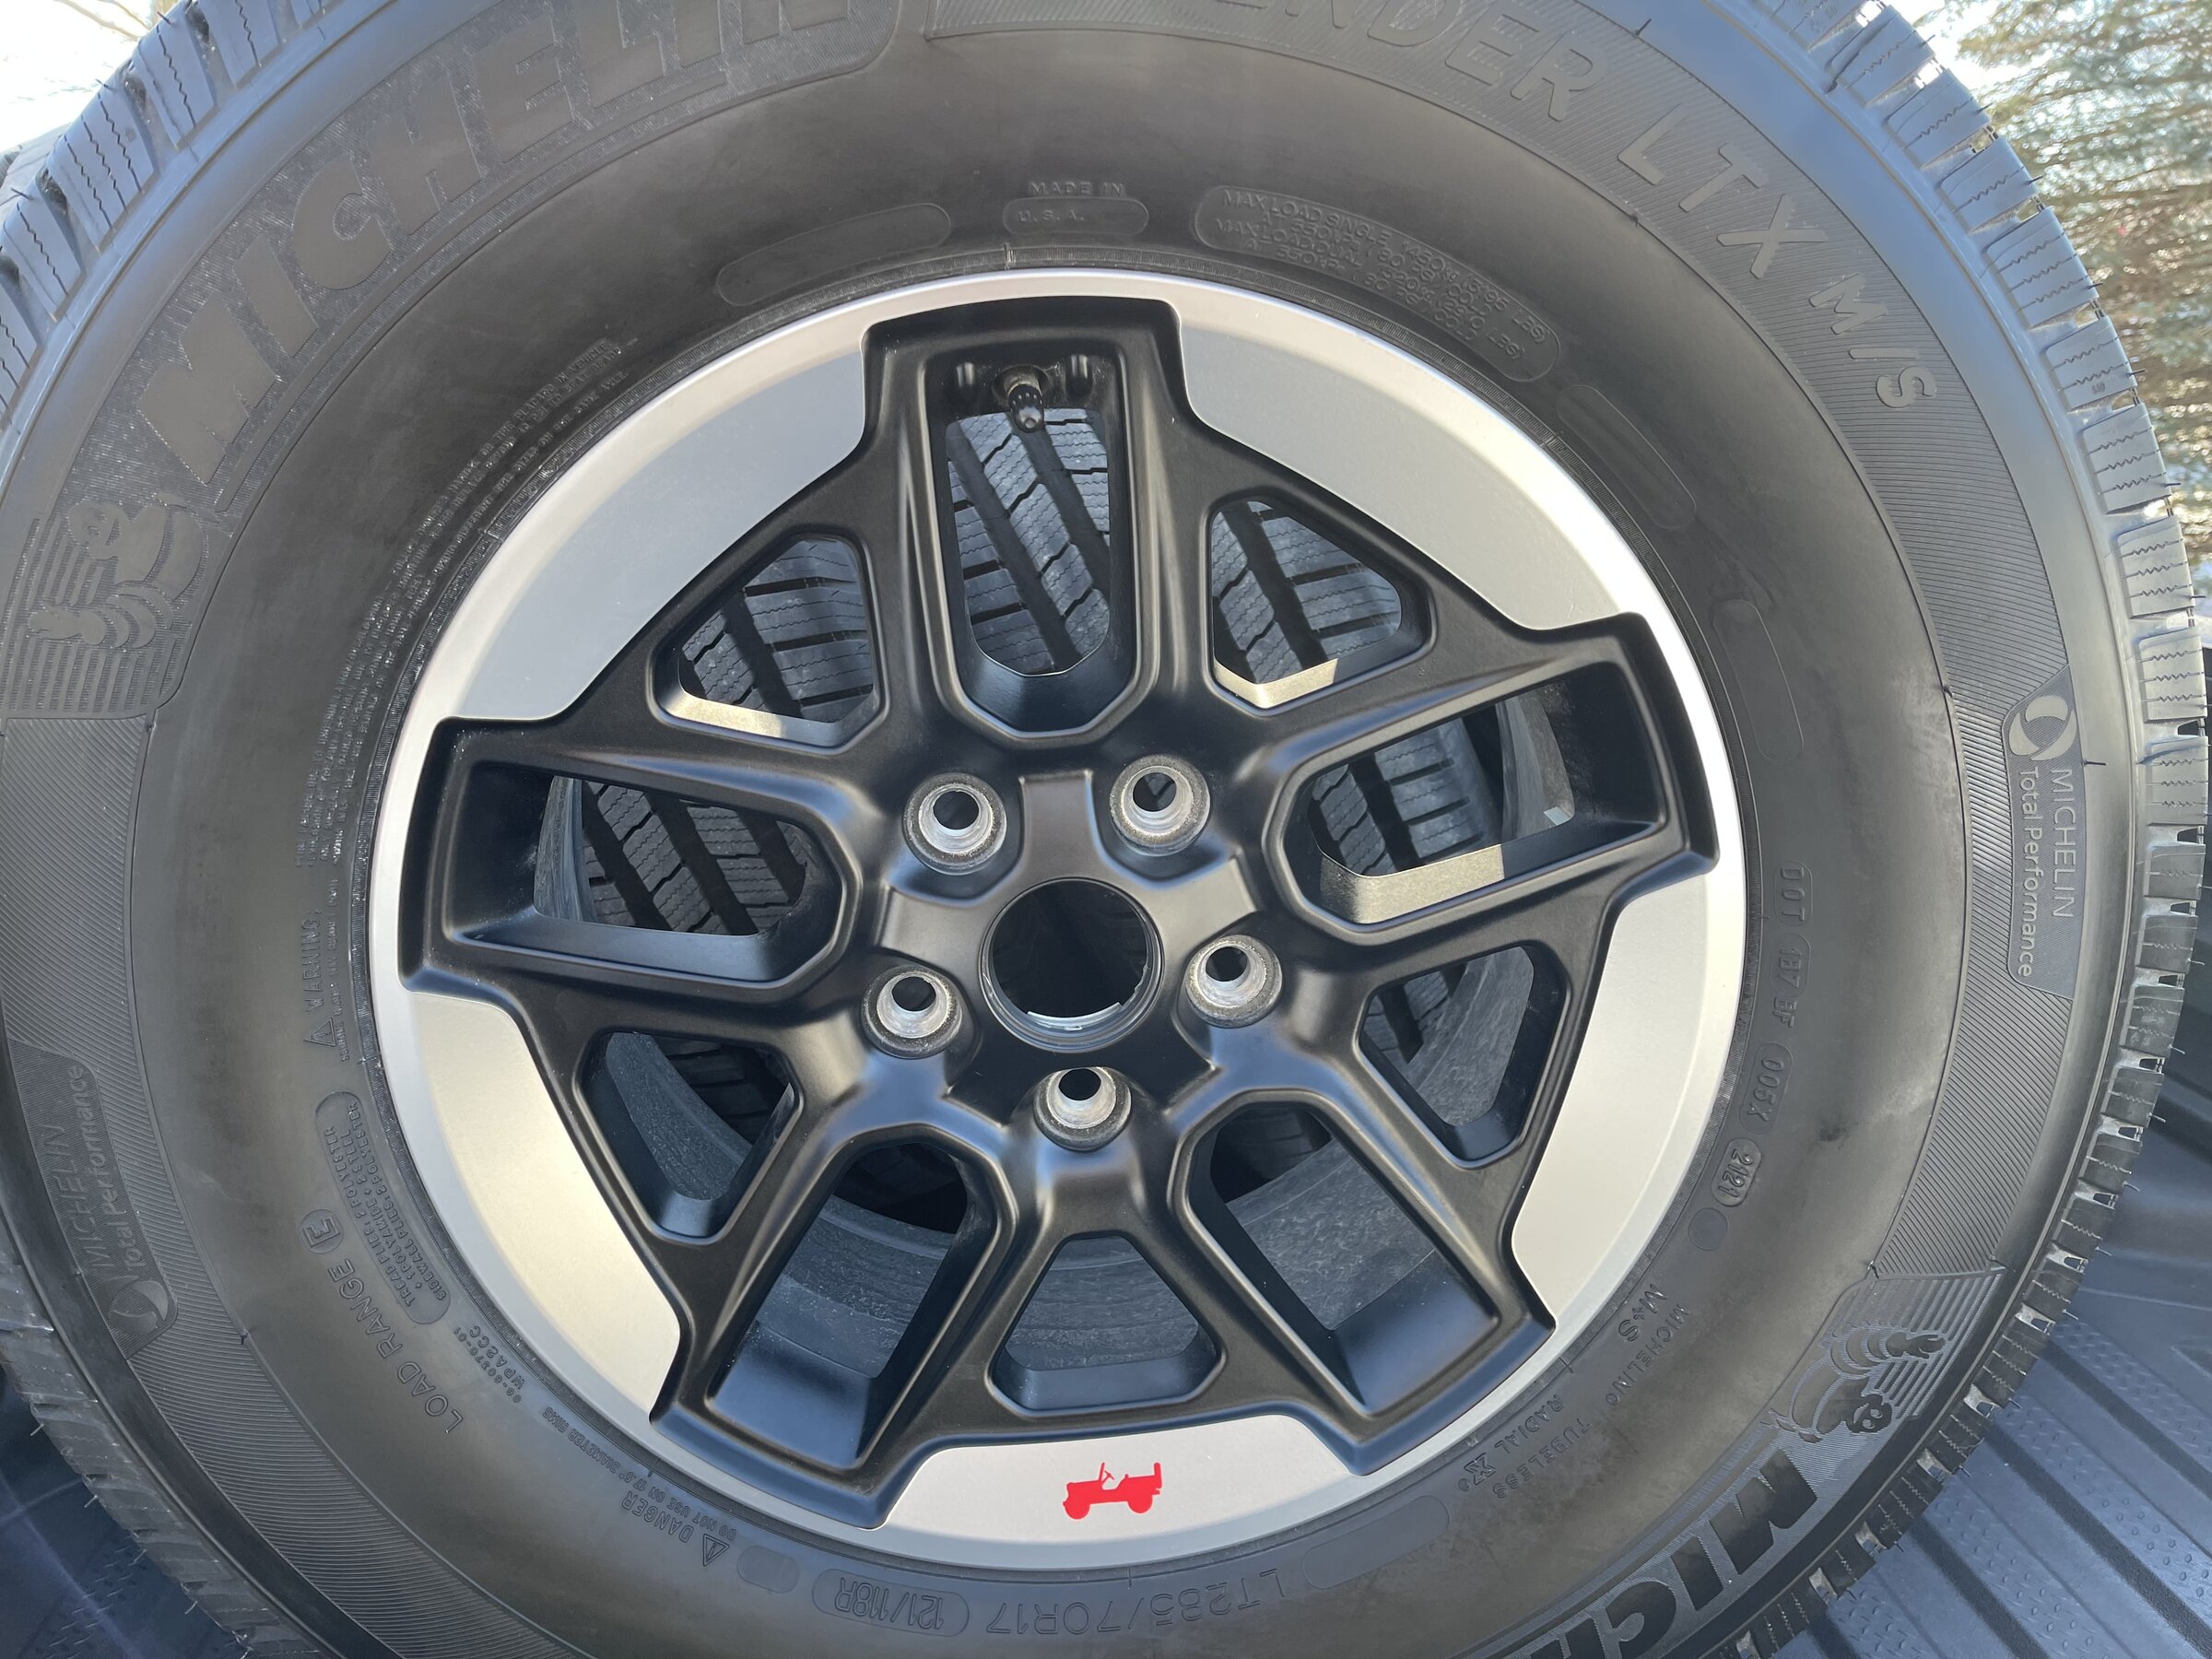 Iowa - 2021 Jeep Wrangler Rubicon OEM Rims and Michelin Tires $1,100  (Pending) | Jeep Wrangler Forums (JL / JLU) - Rubicon, Sahara, Sport, 4xe,  392 